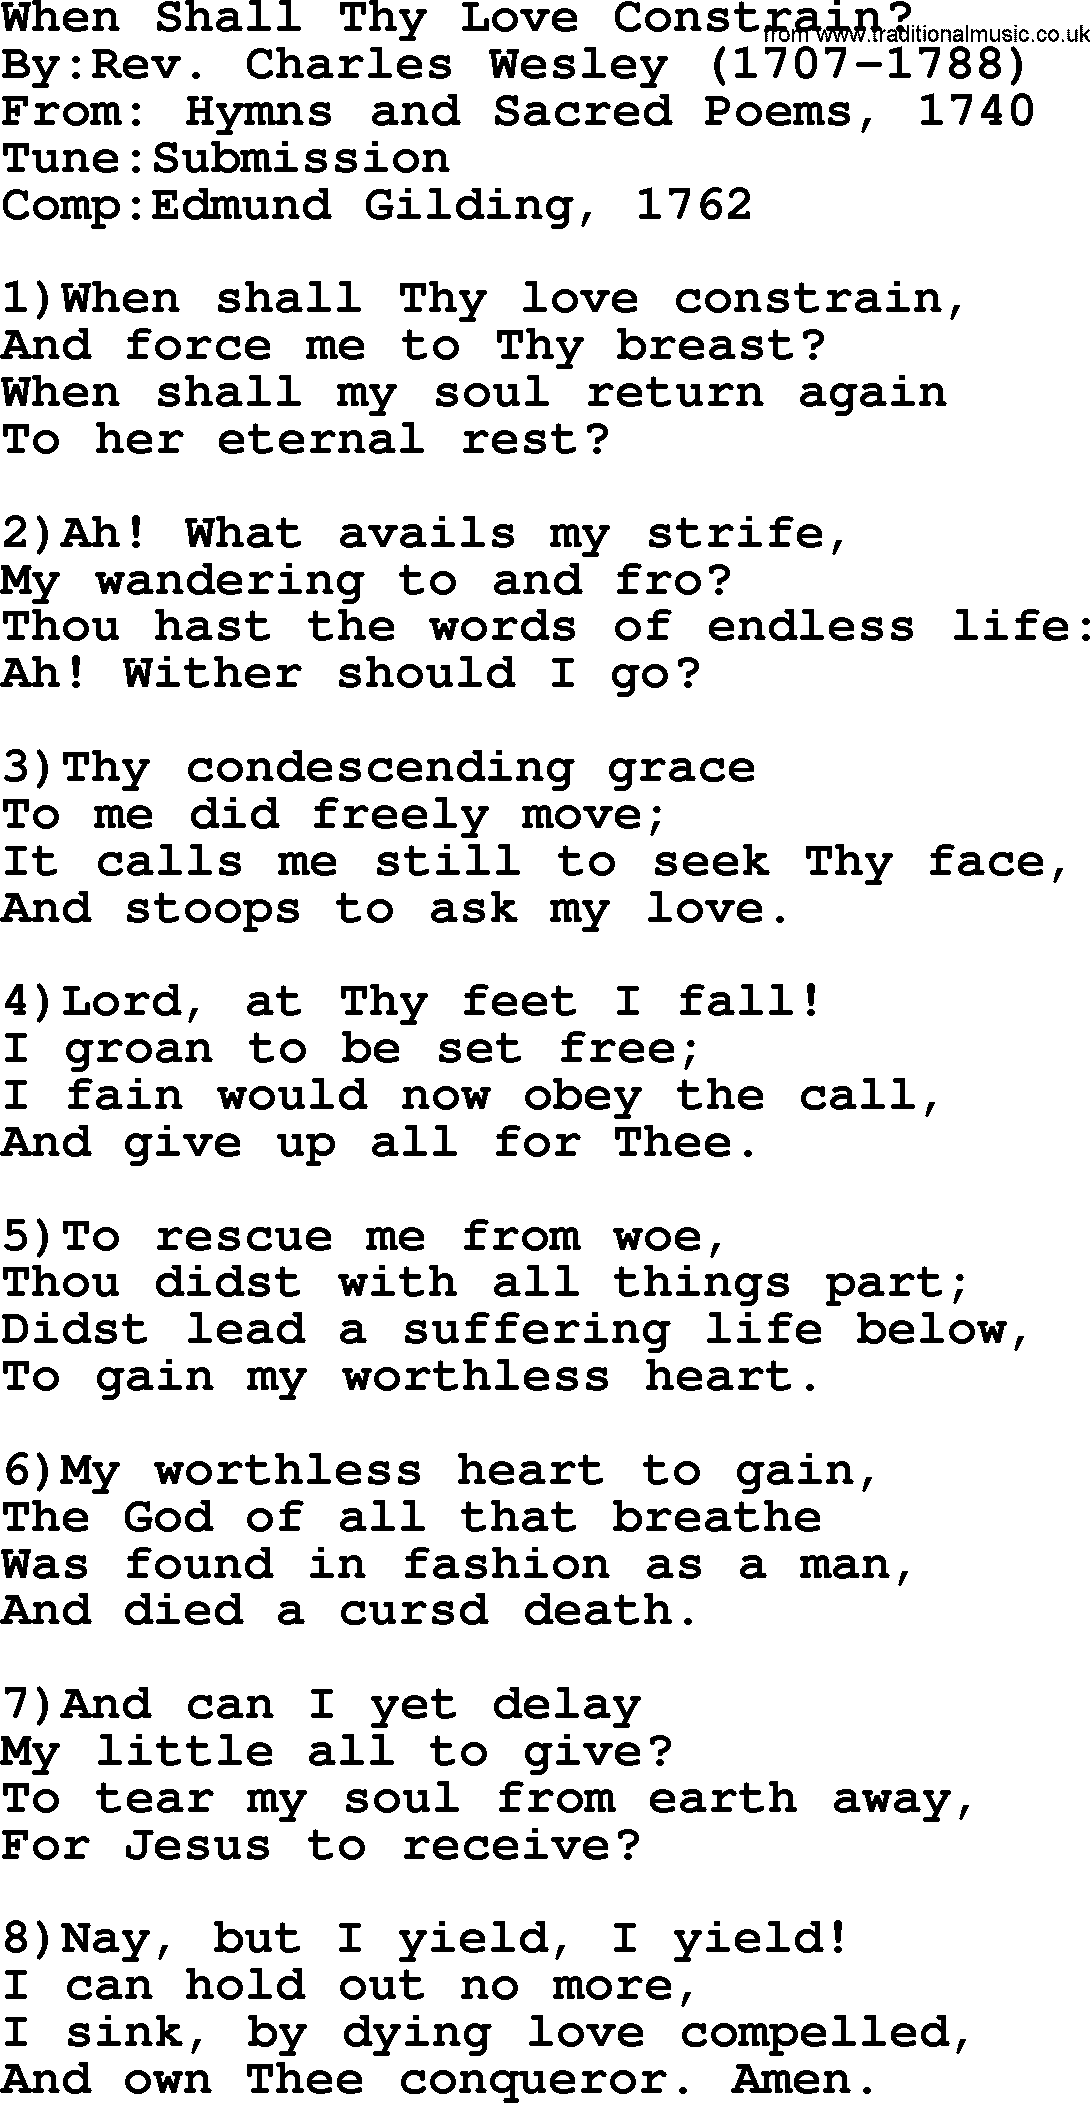 Methodist Hymn: When Shall Thy Love Constrain, lyrics